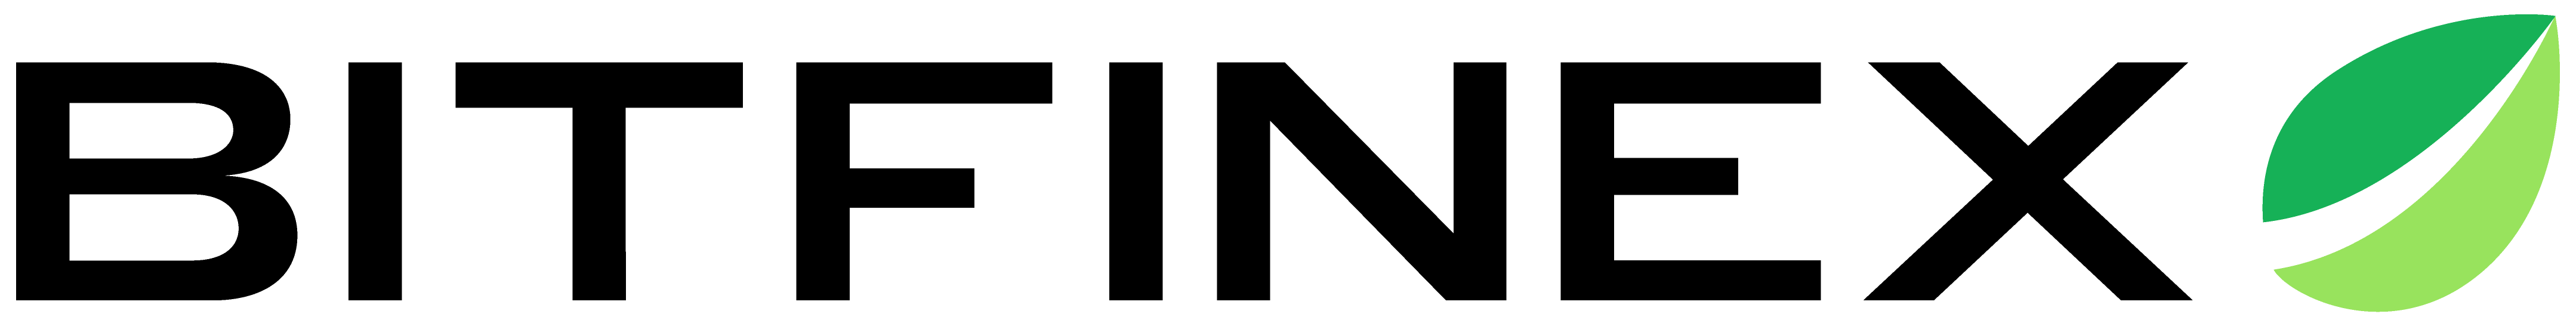 Bitfinex logo colors